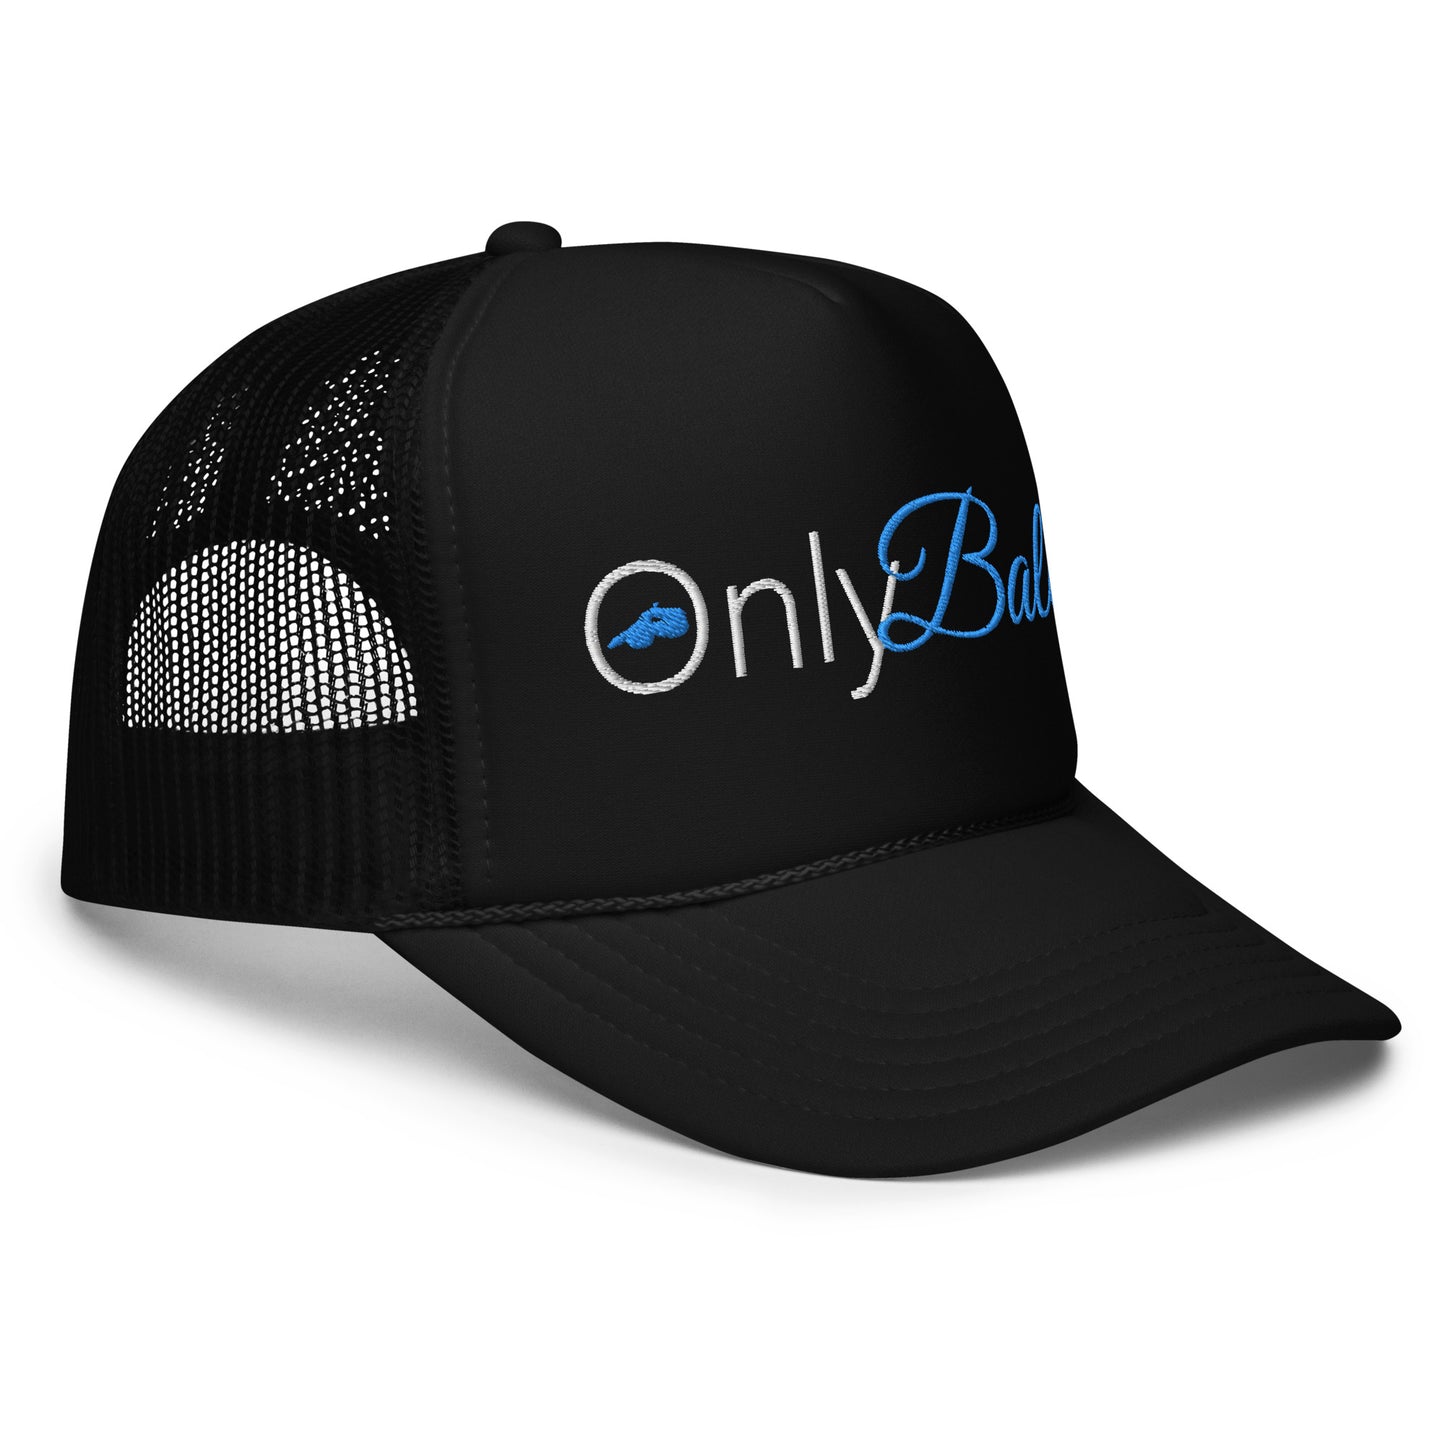 OnlyBalls Hat